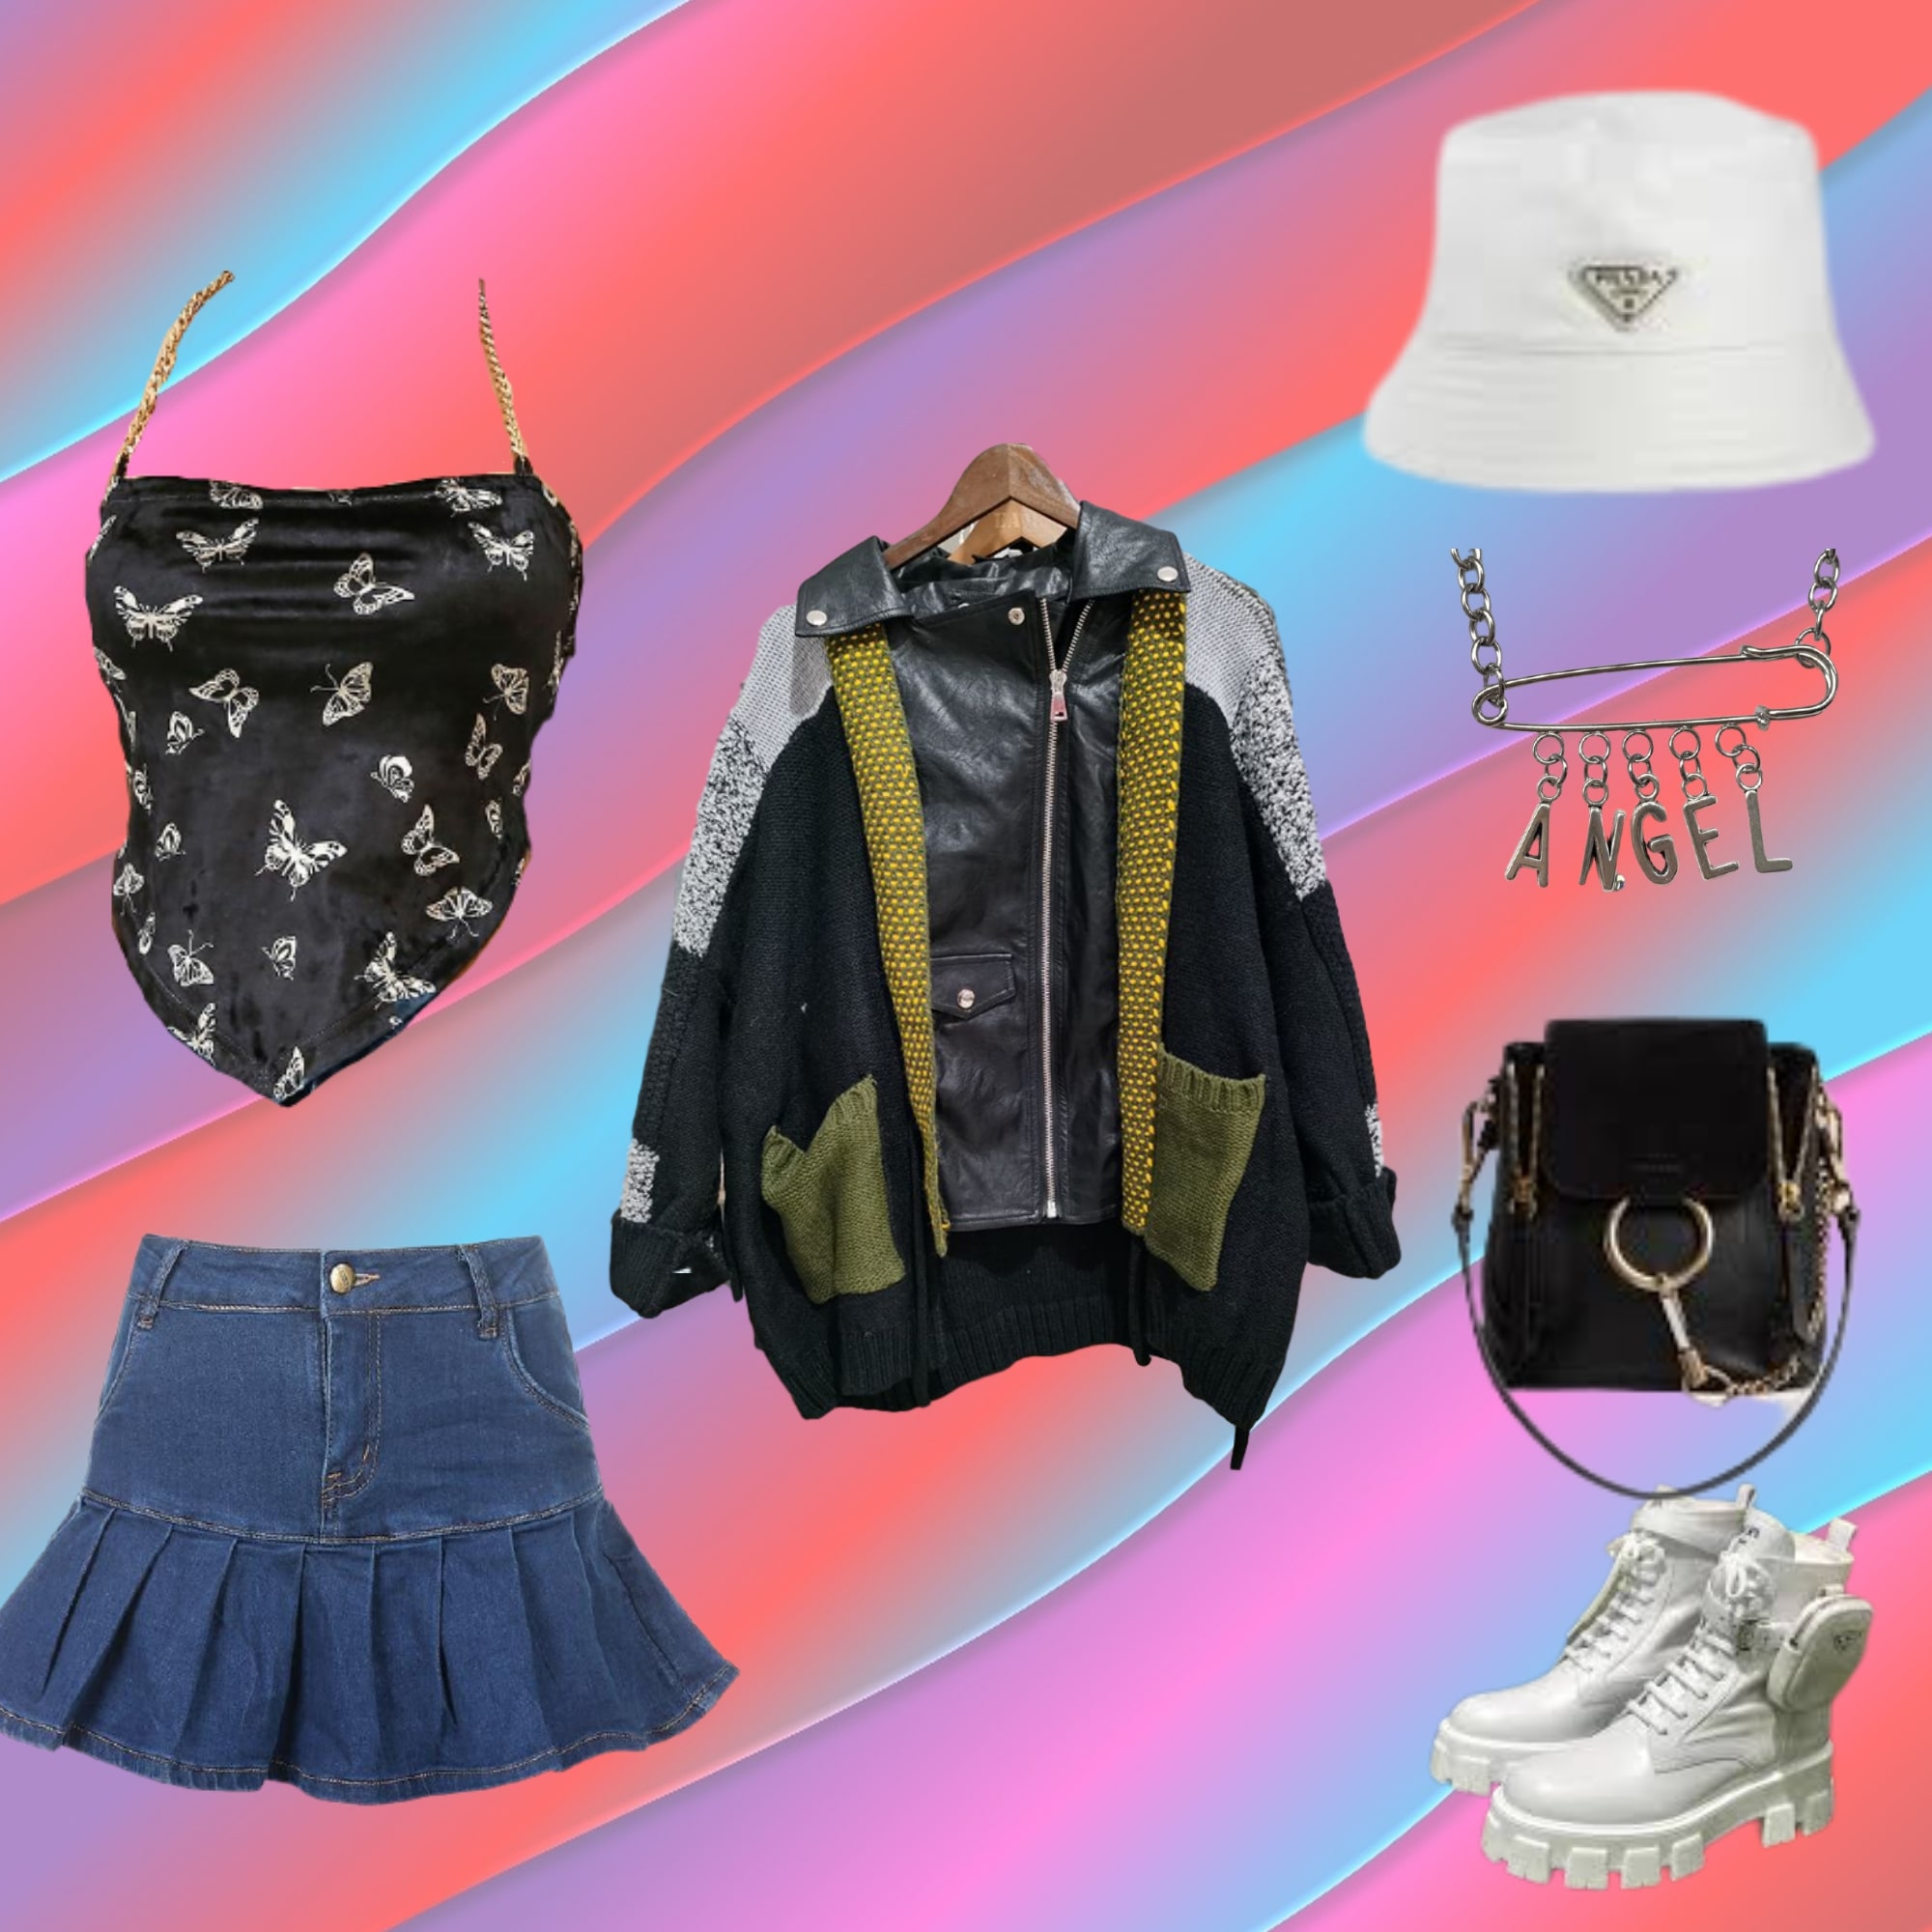 egirl aesthetic outfit ideas